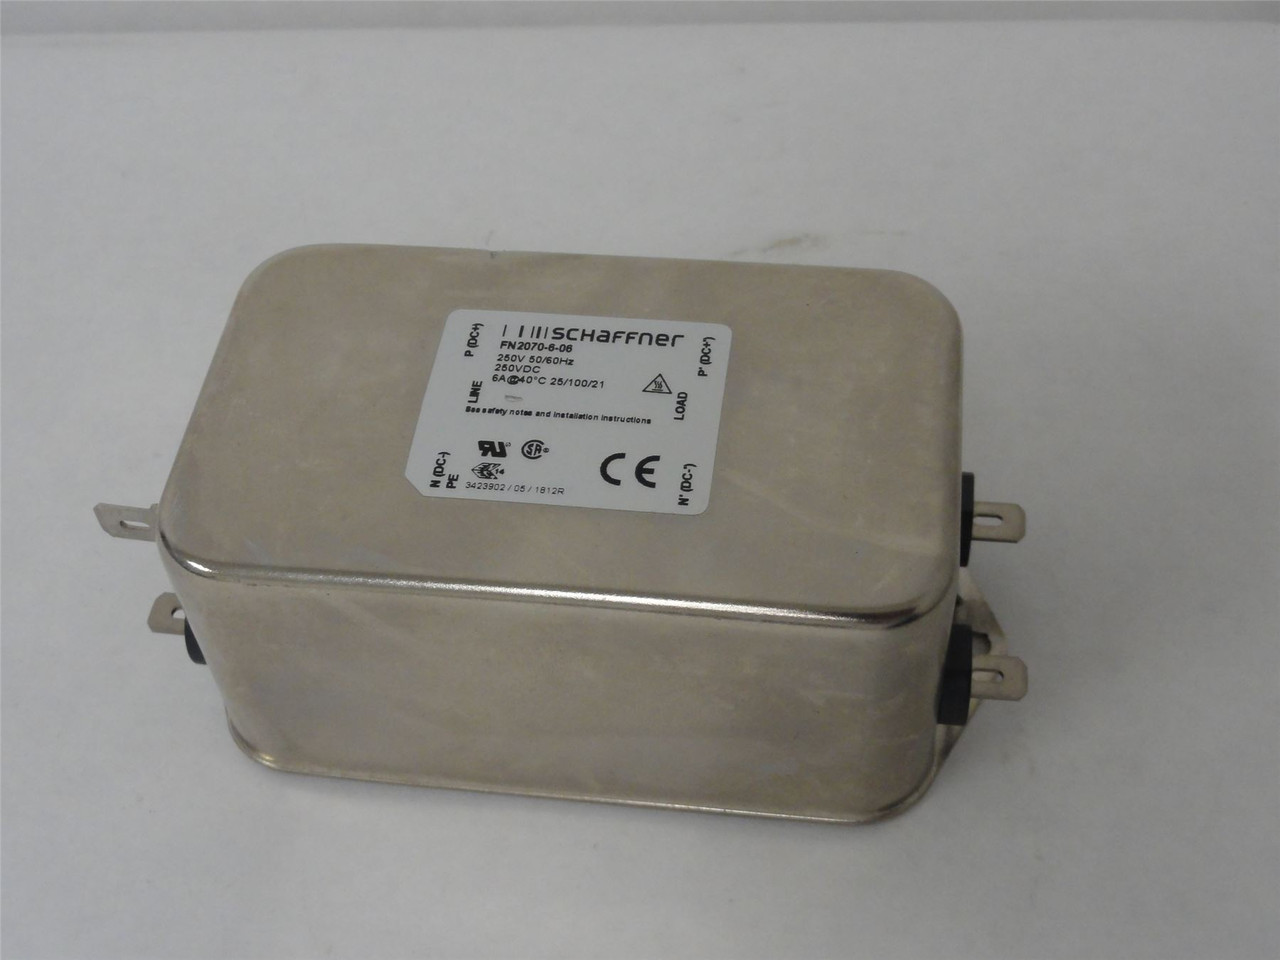 Schaffner FN2070-6-06; AC Filter;1Ph; 250VAC; 6A; EMI